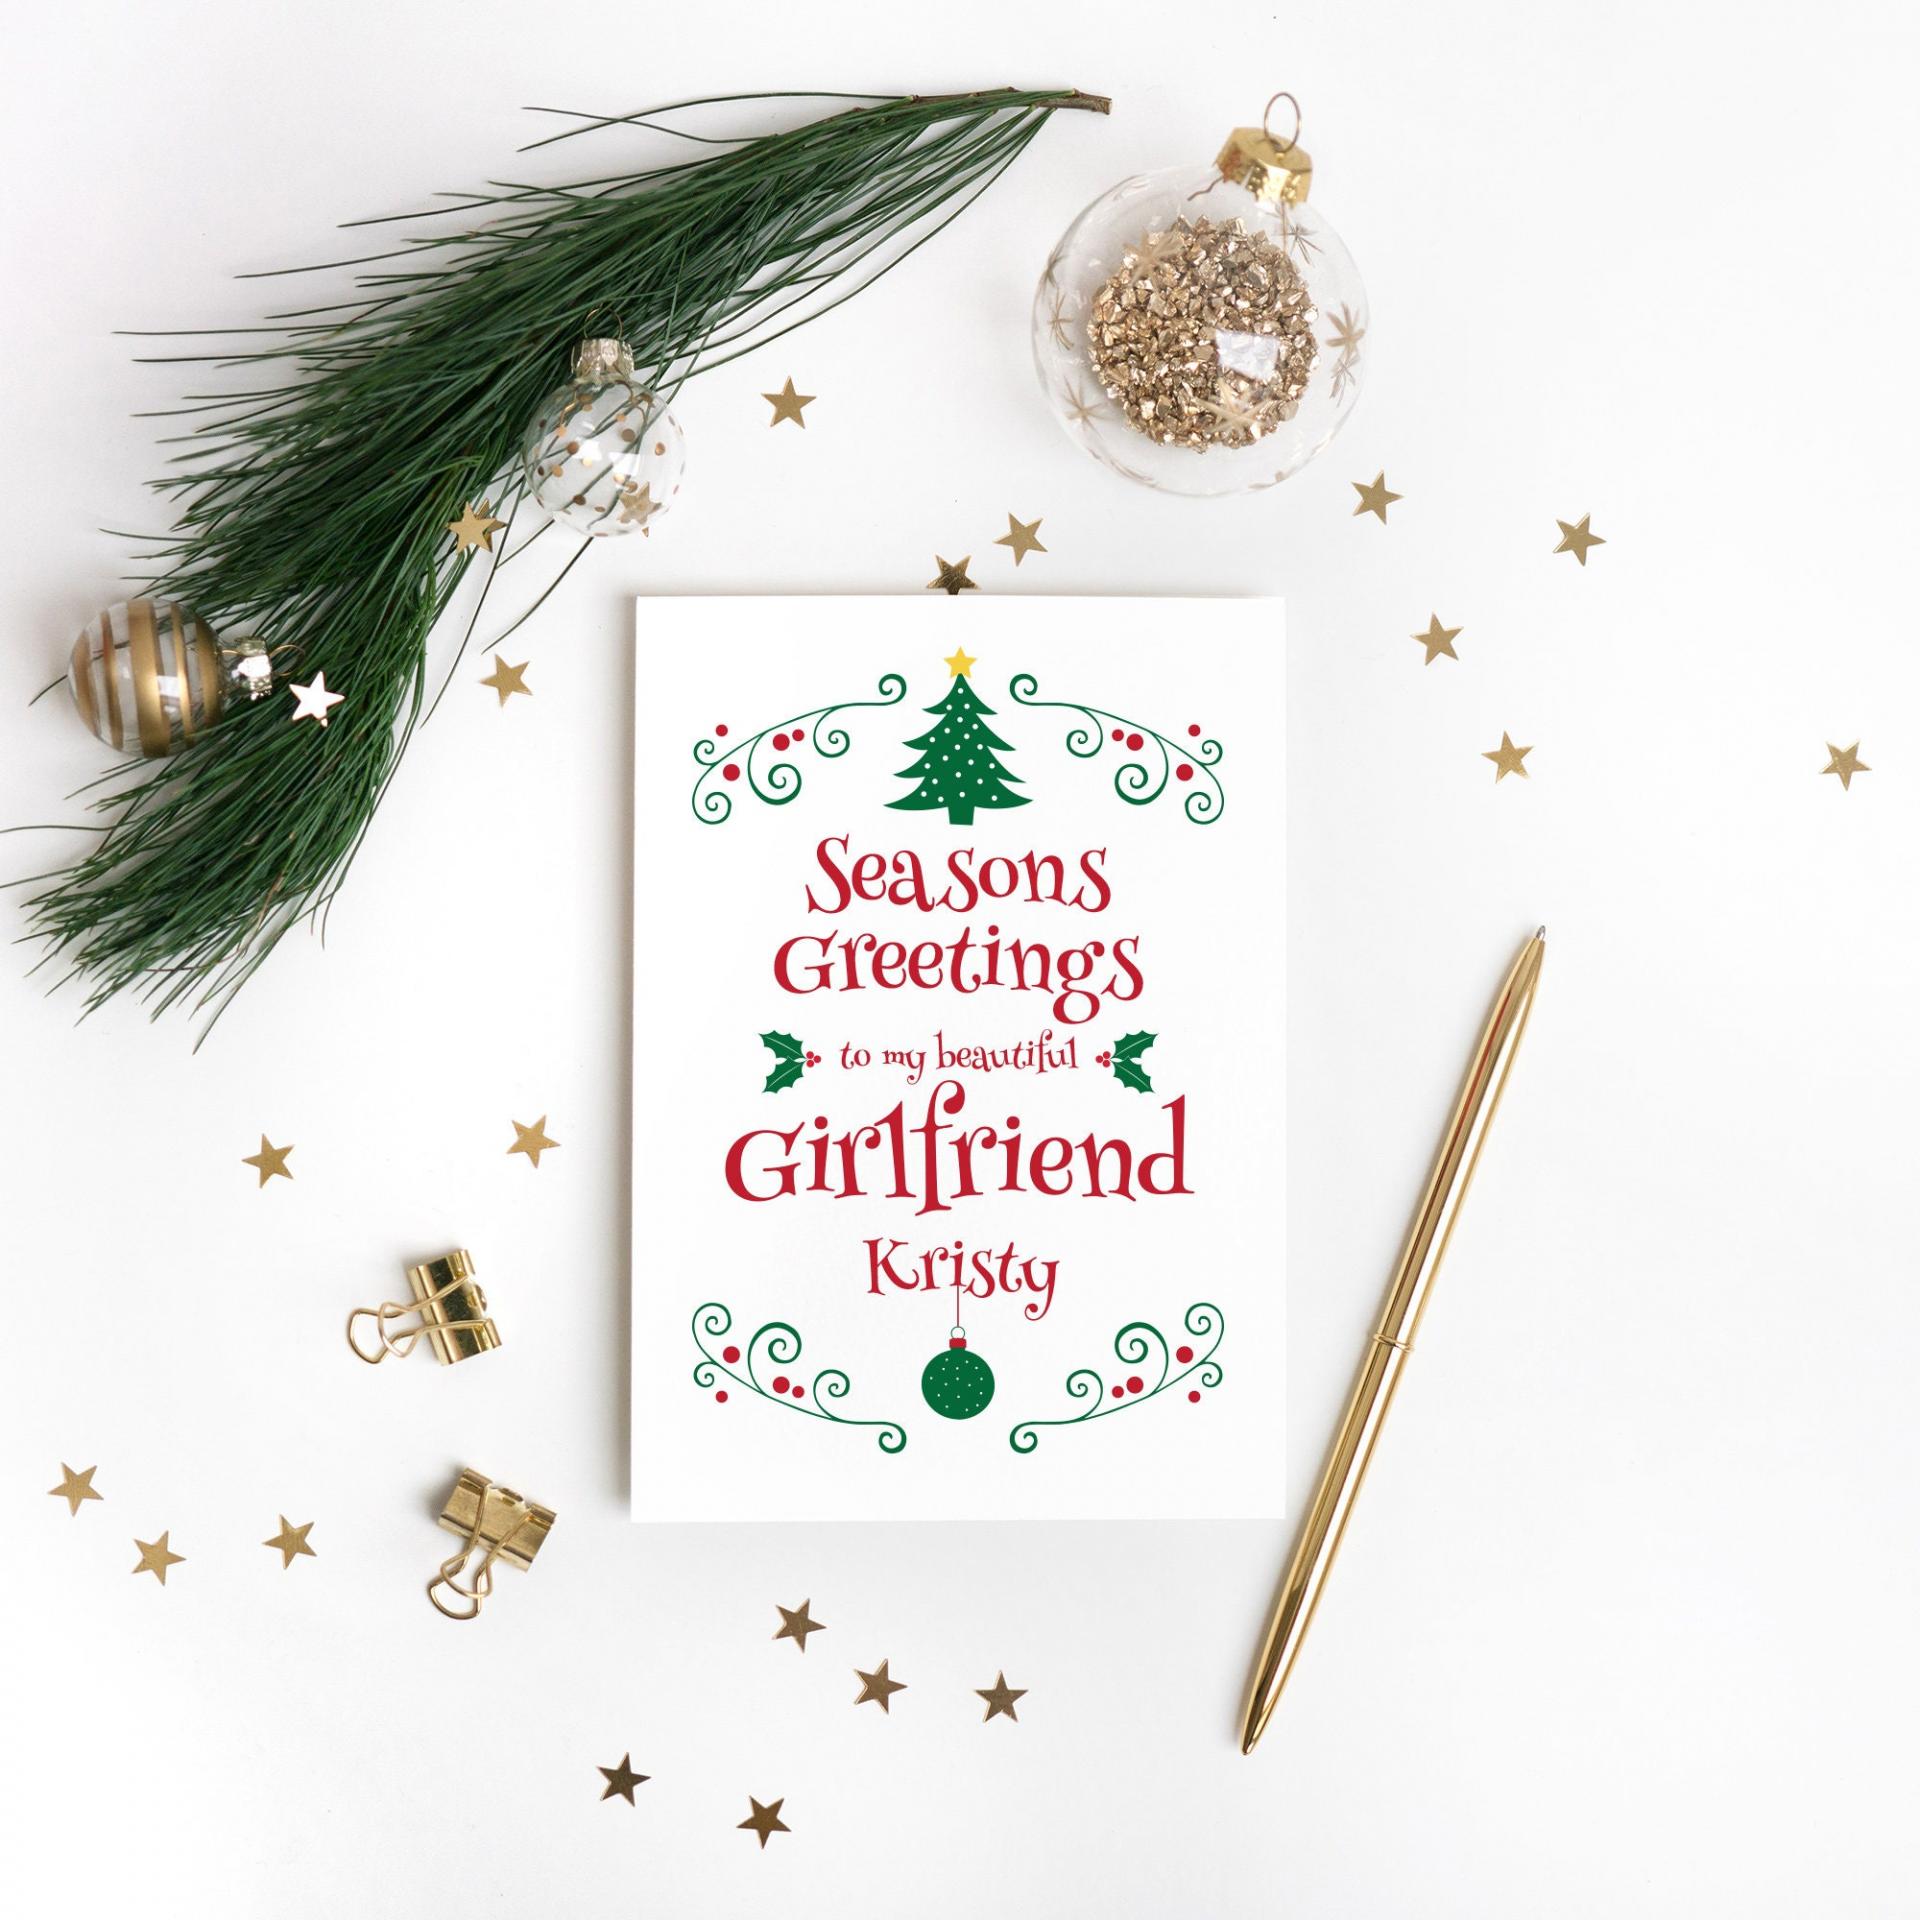 Girlfriend Christmas Card, Gift For Girlfriend, Romantic Christmas, Christmas Girlfriend Card, Girlfriend Xmas Card, Christmas Love